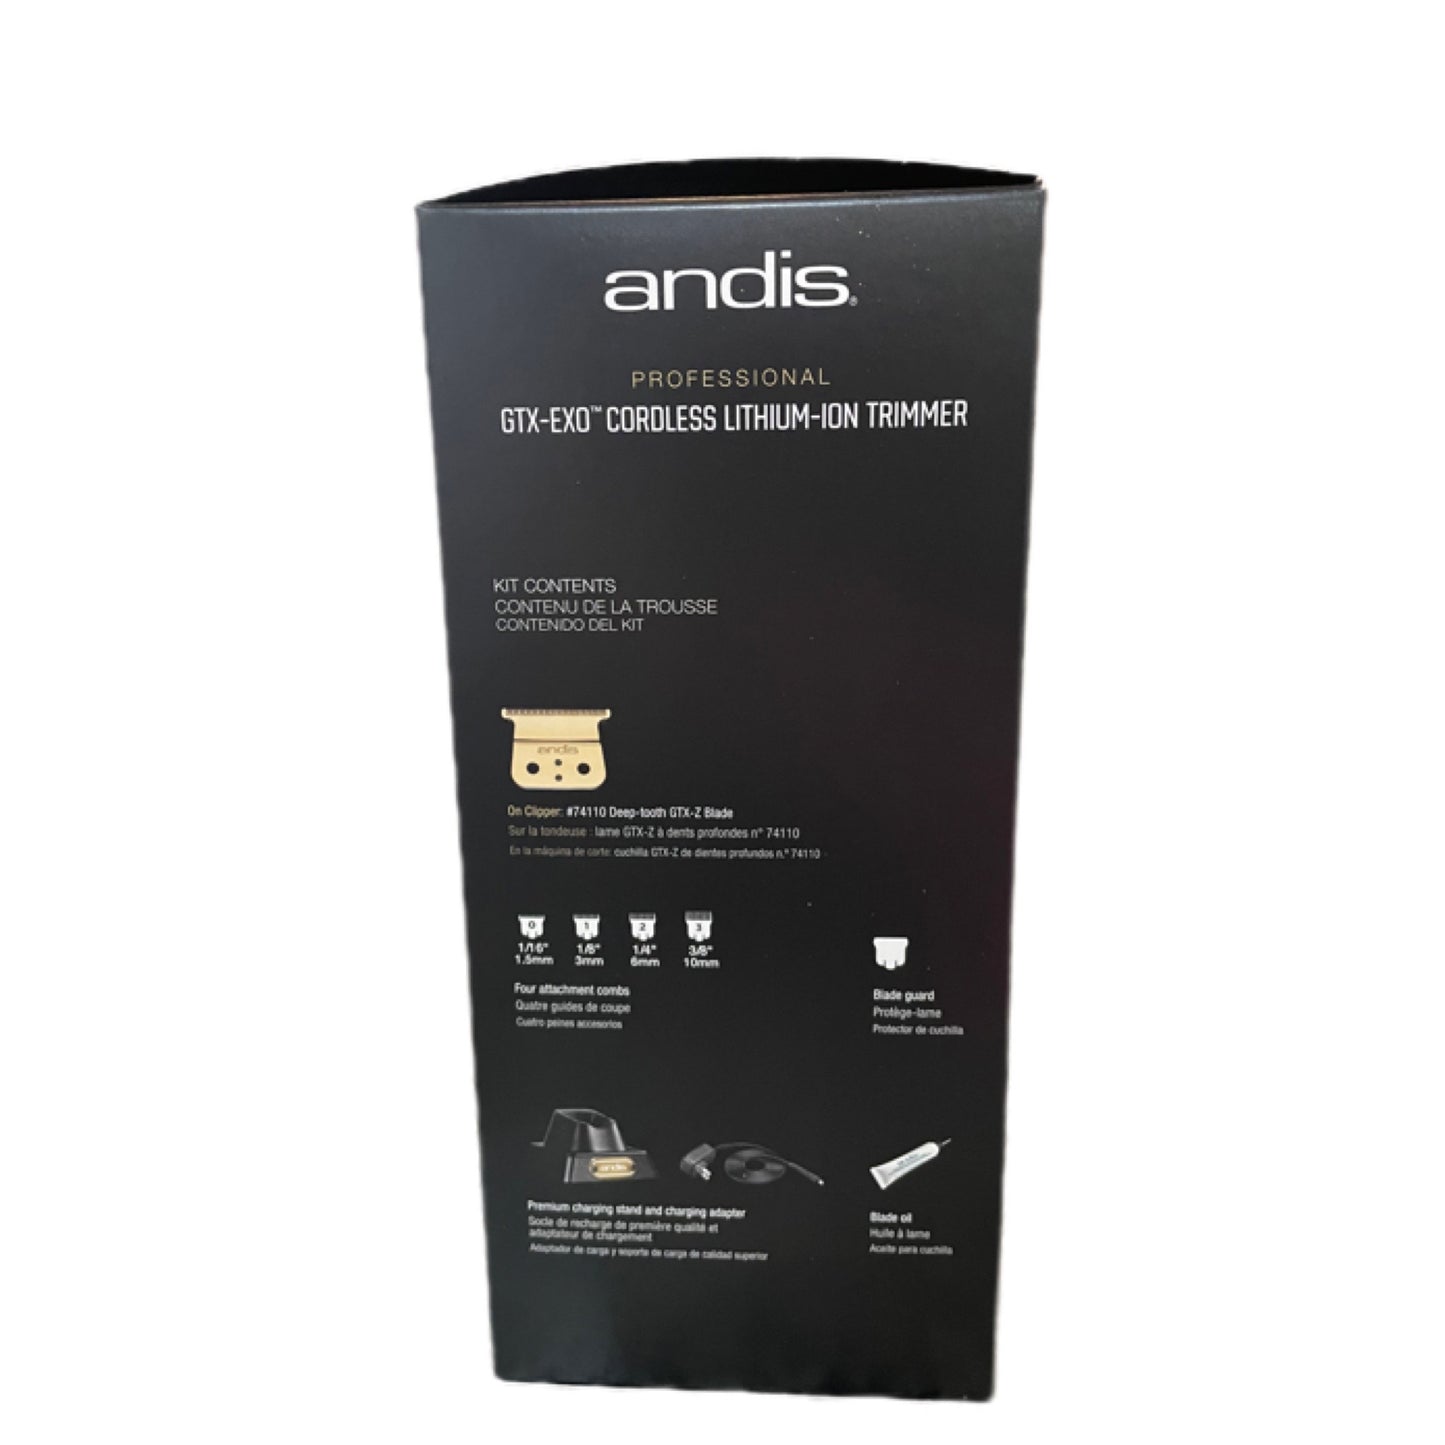 Andis GTX EXO Cordless Trimmer Box